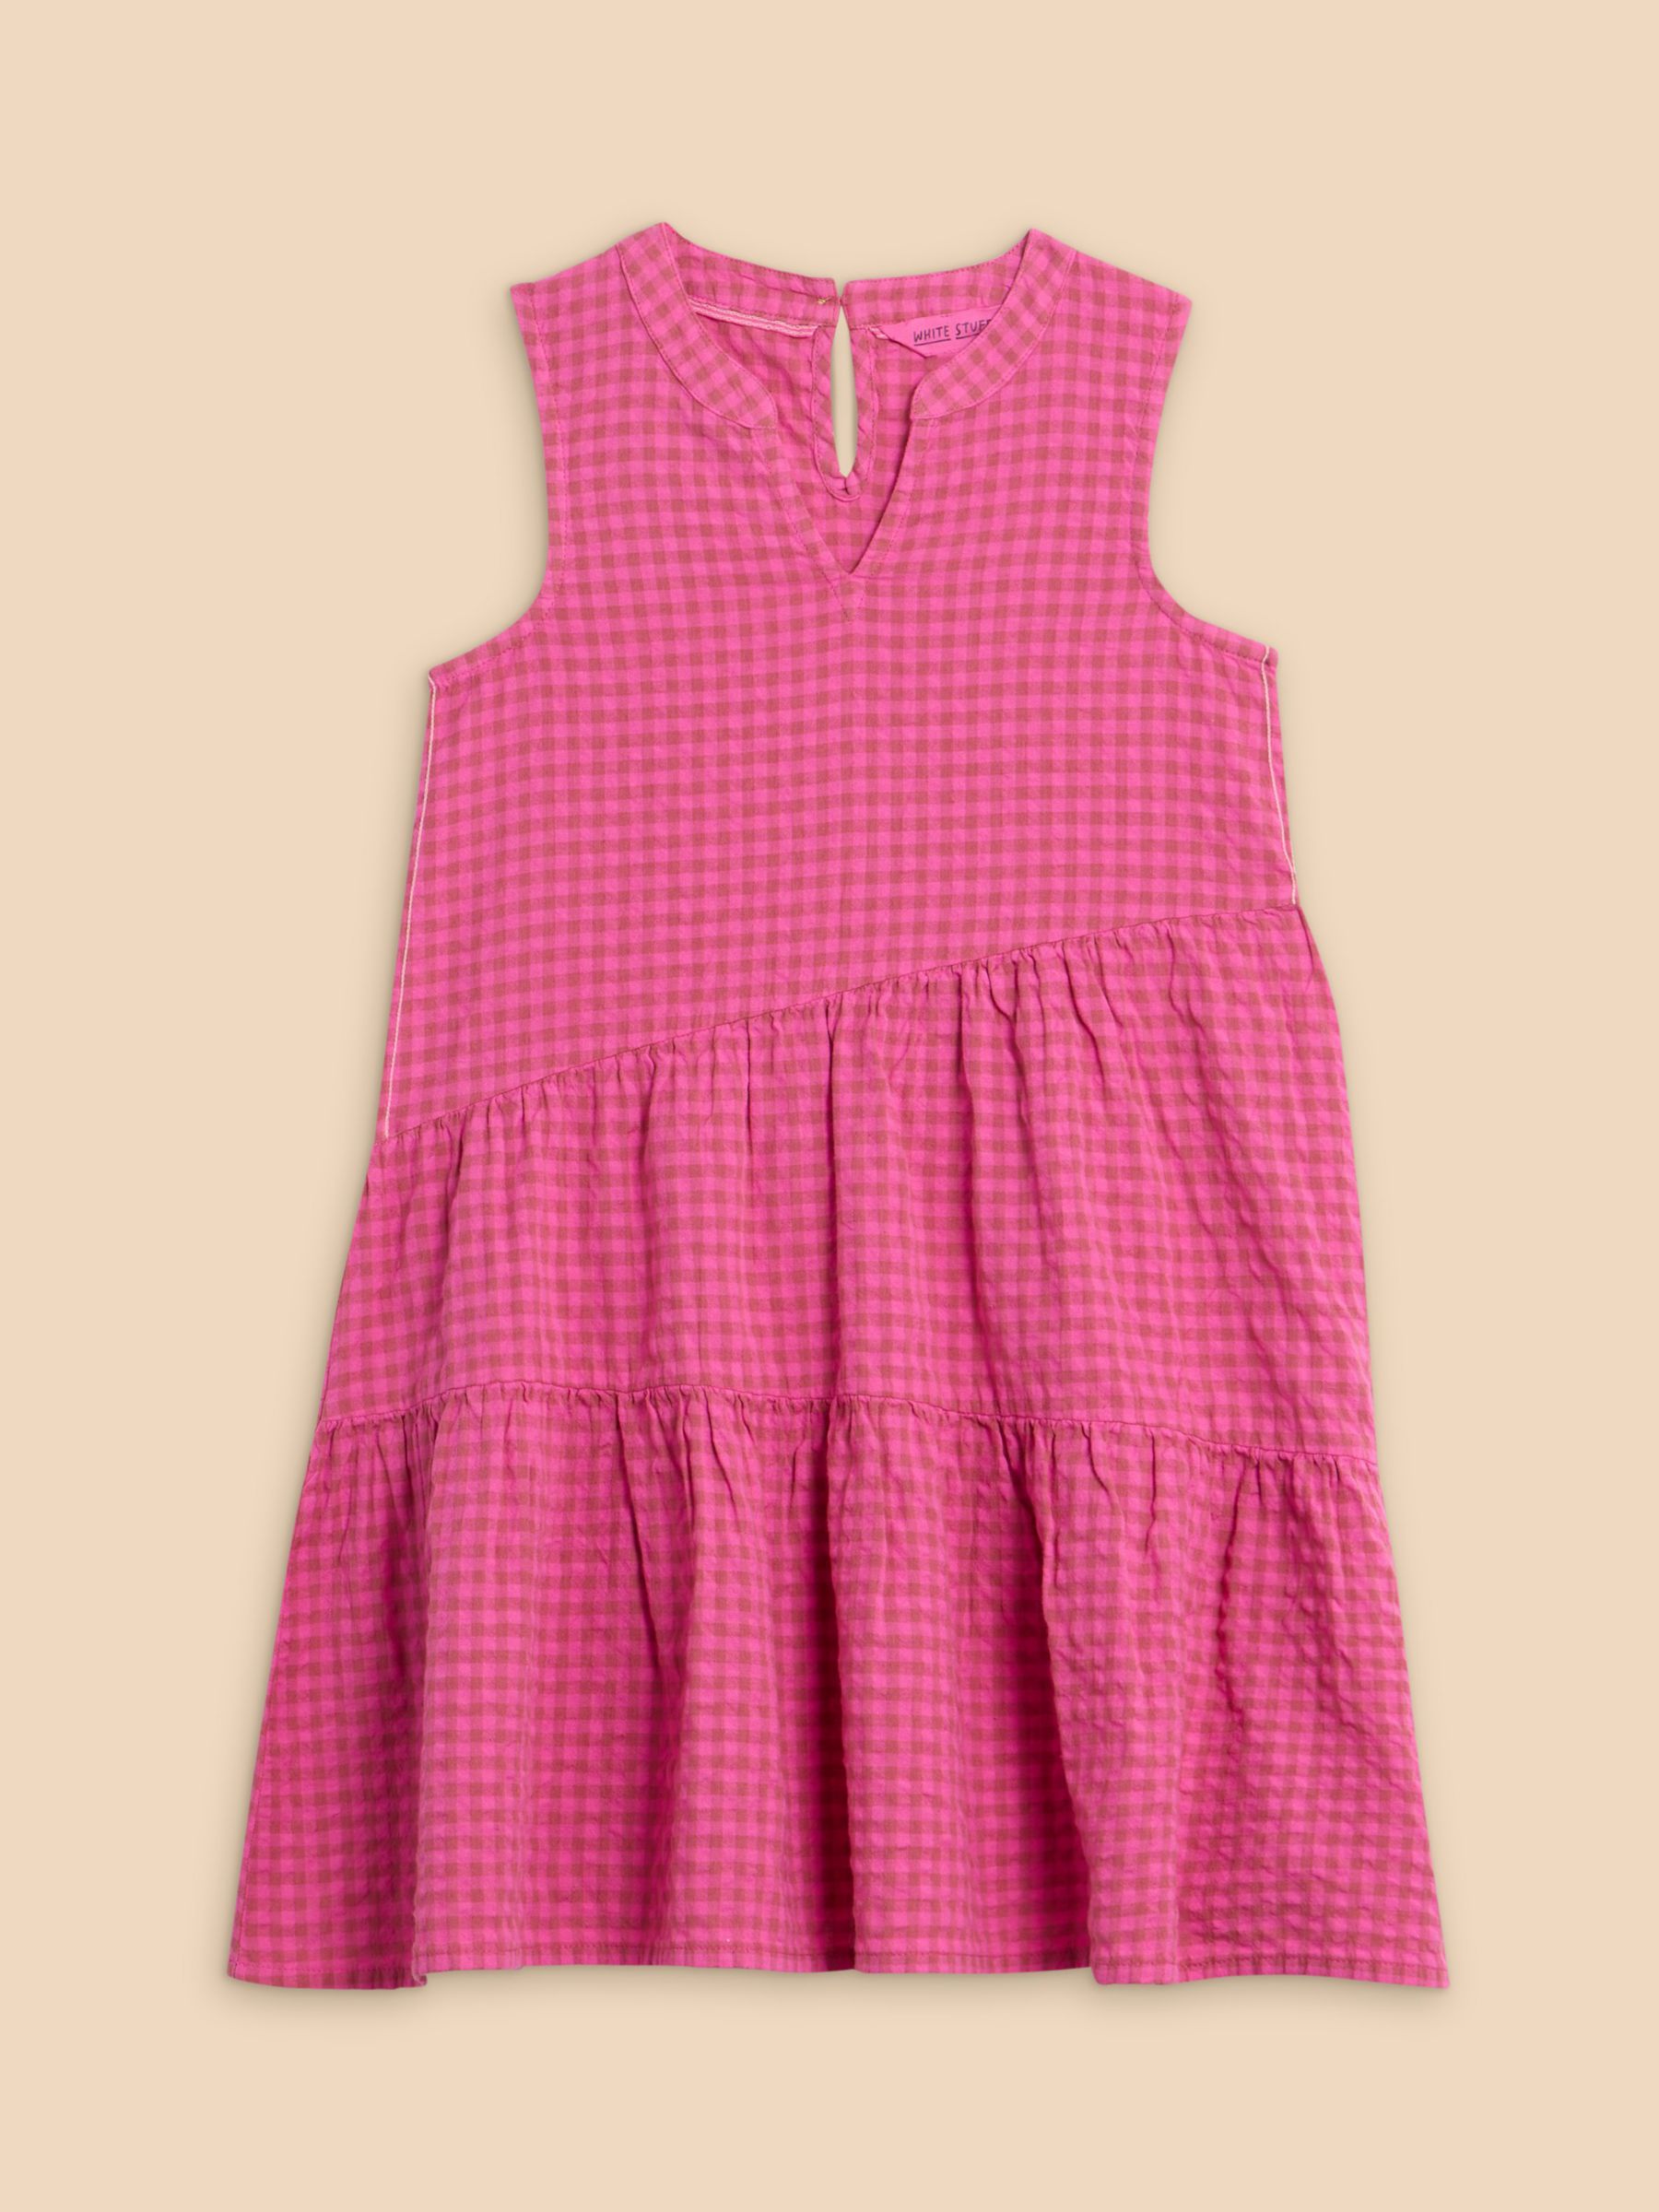 White Stuff Kids' Gingham Dress, Pink, 3-4 years